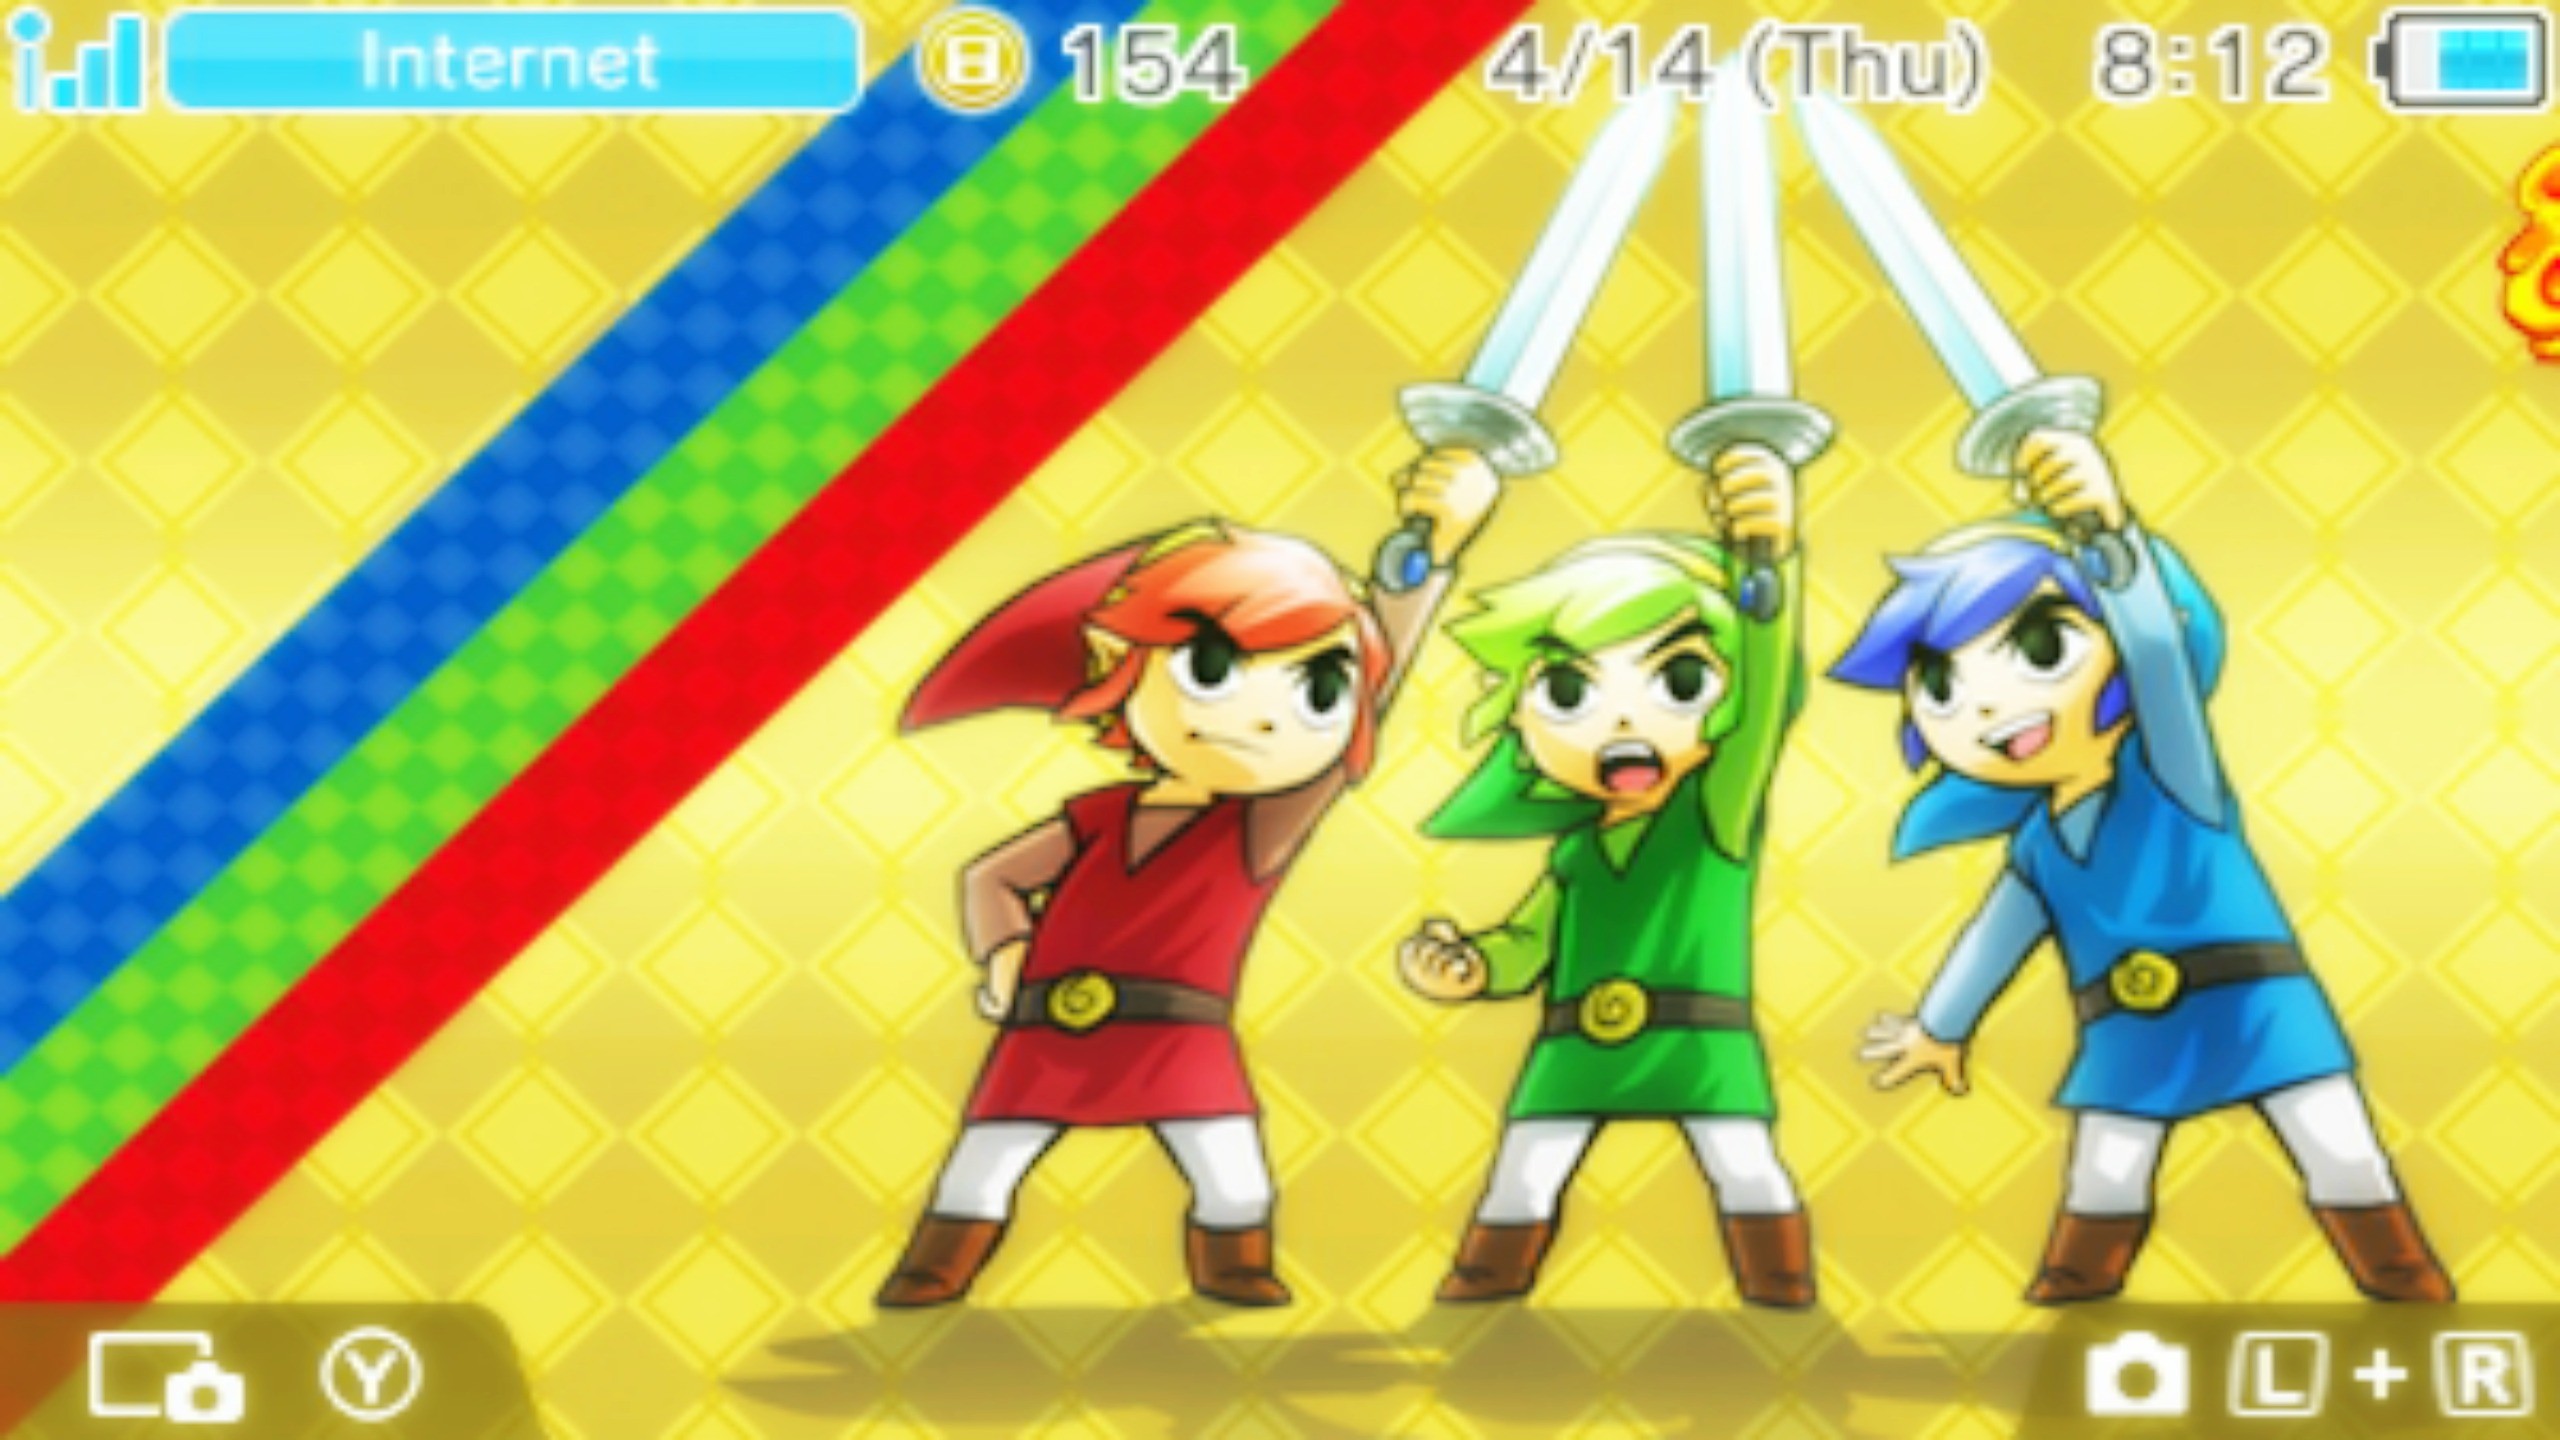 2560x1440 ... ObsessedGamerGal86 Triforce Heroes 3DS Wallpaper #3 by  ObsessedGamerGal86